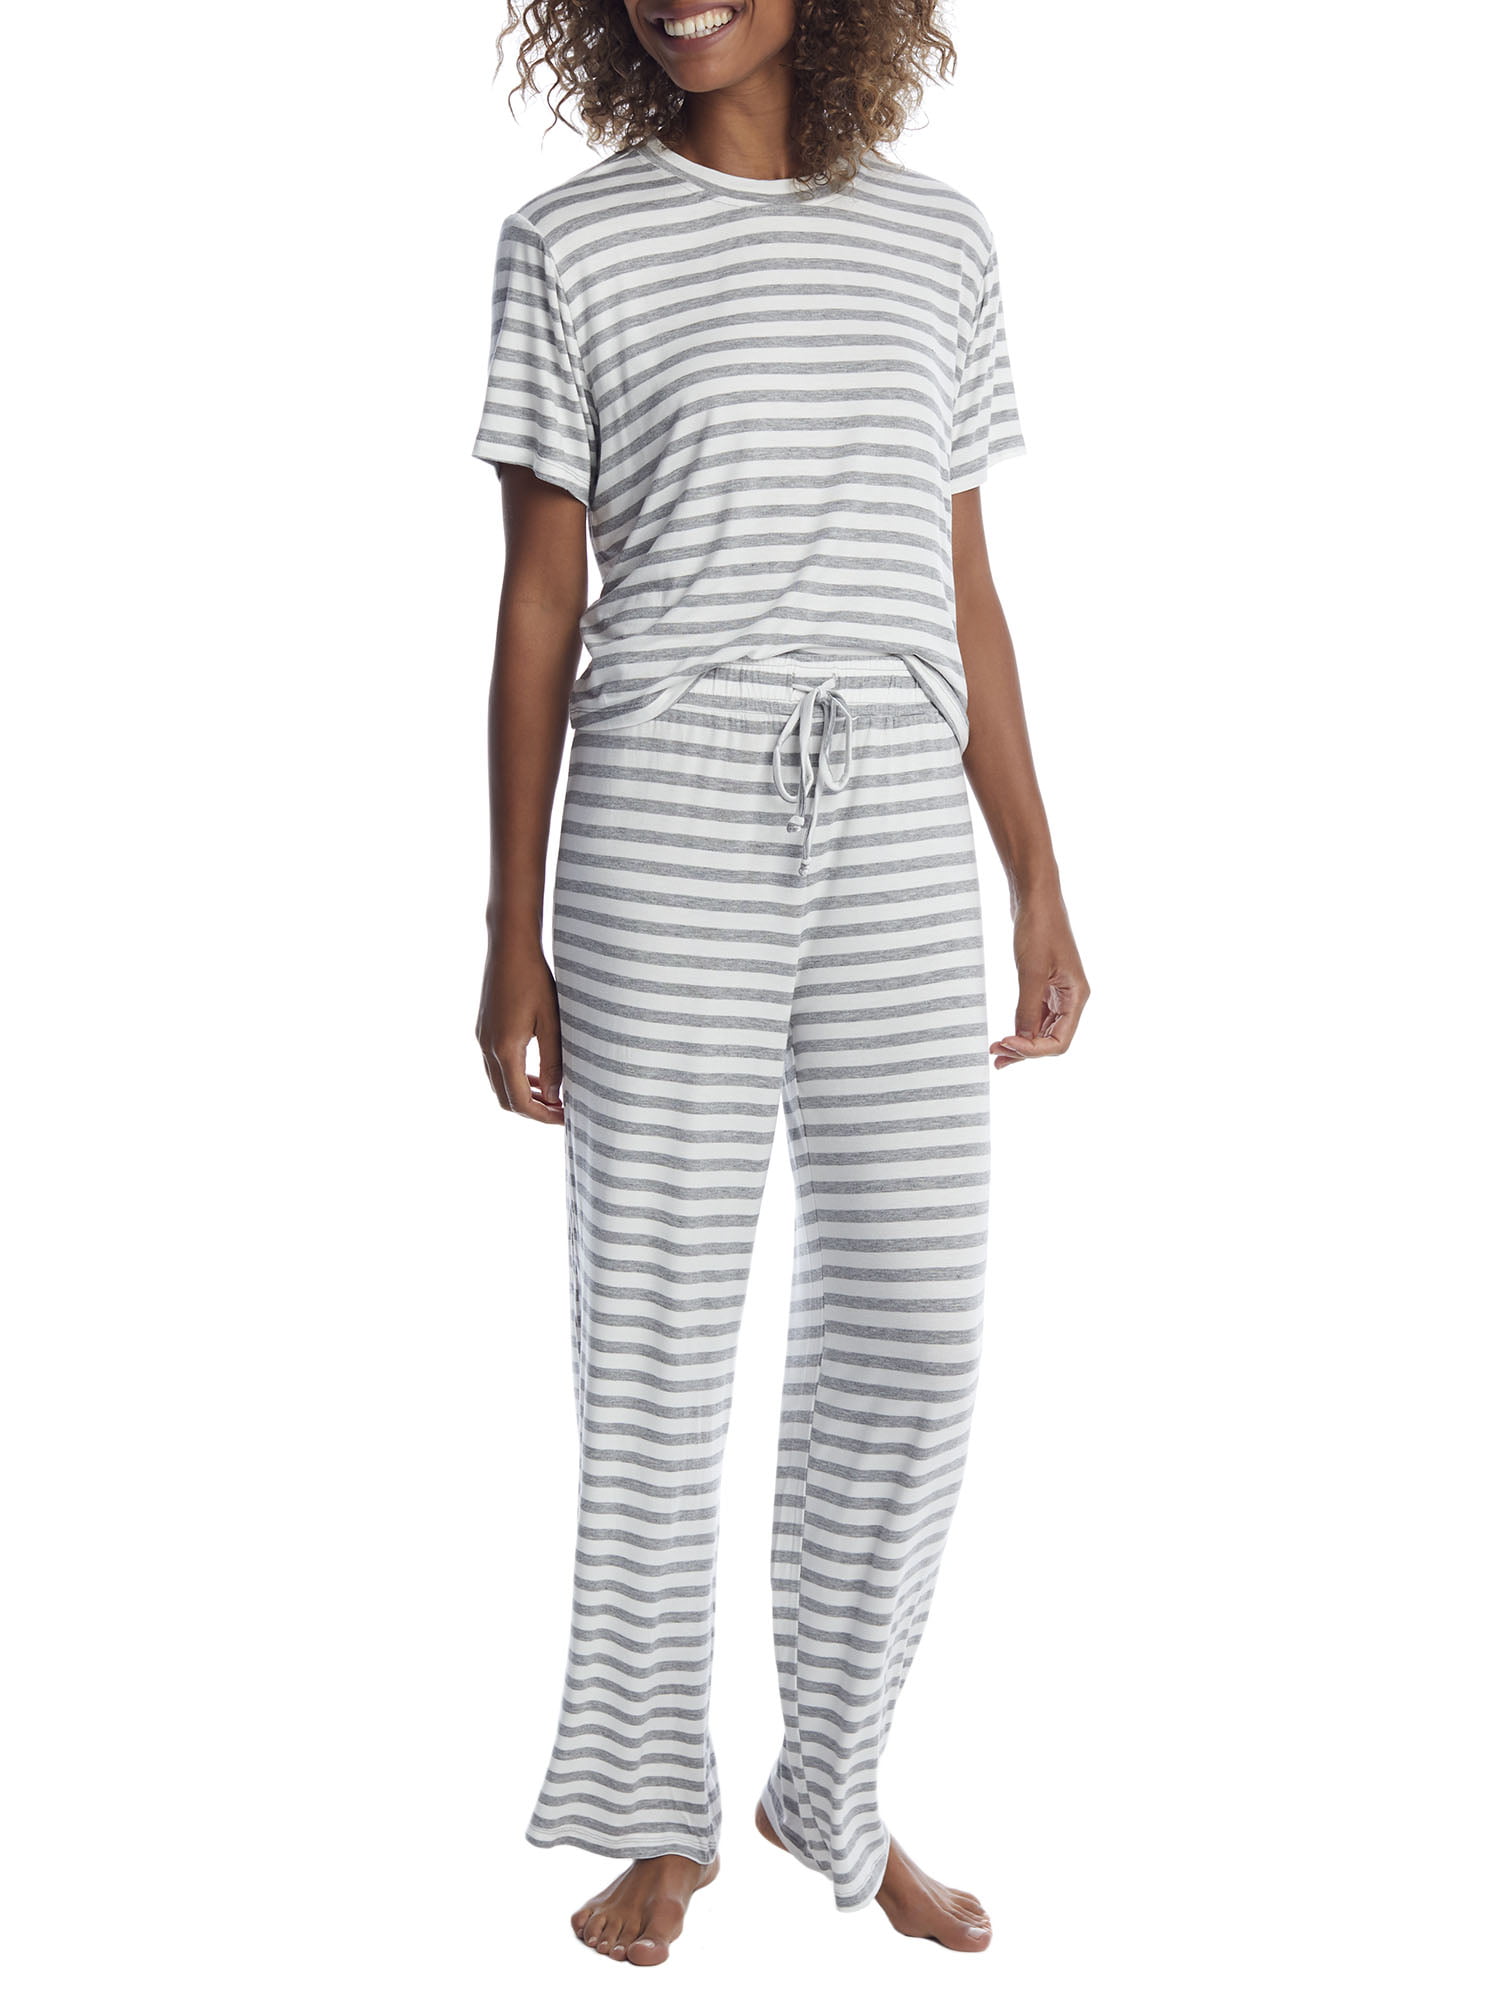 Honeydew Intimates Womens Striped All American Knit Pajama Set  Style-33982-IVORY